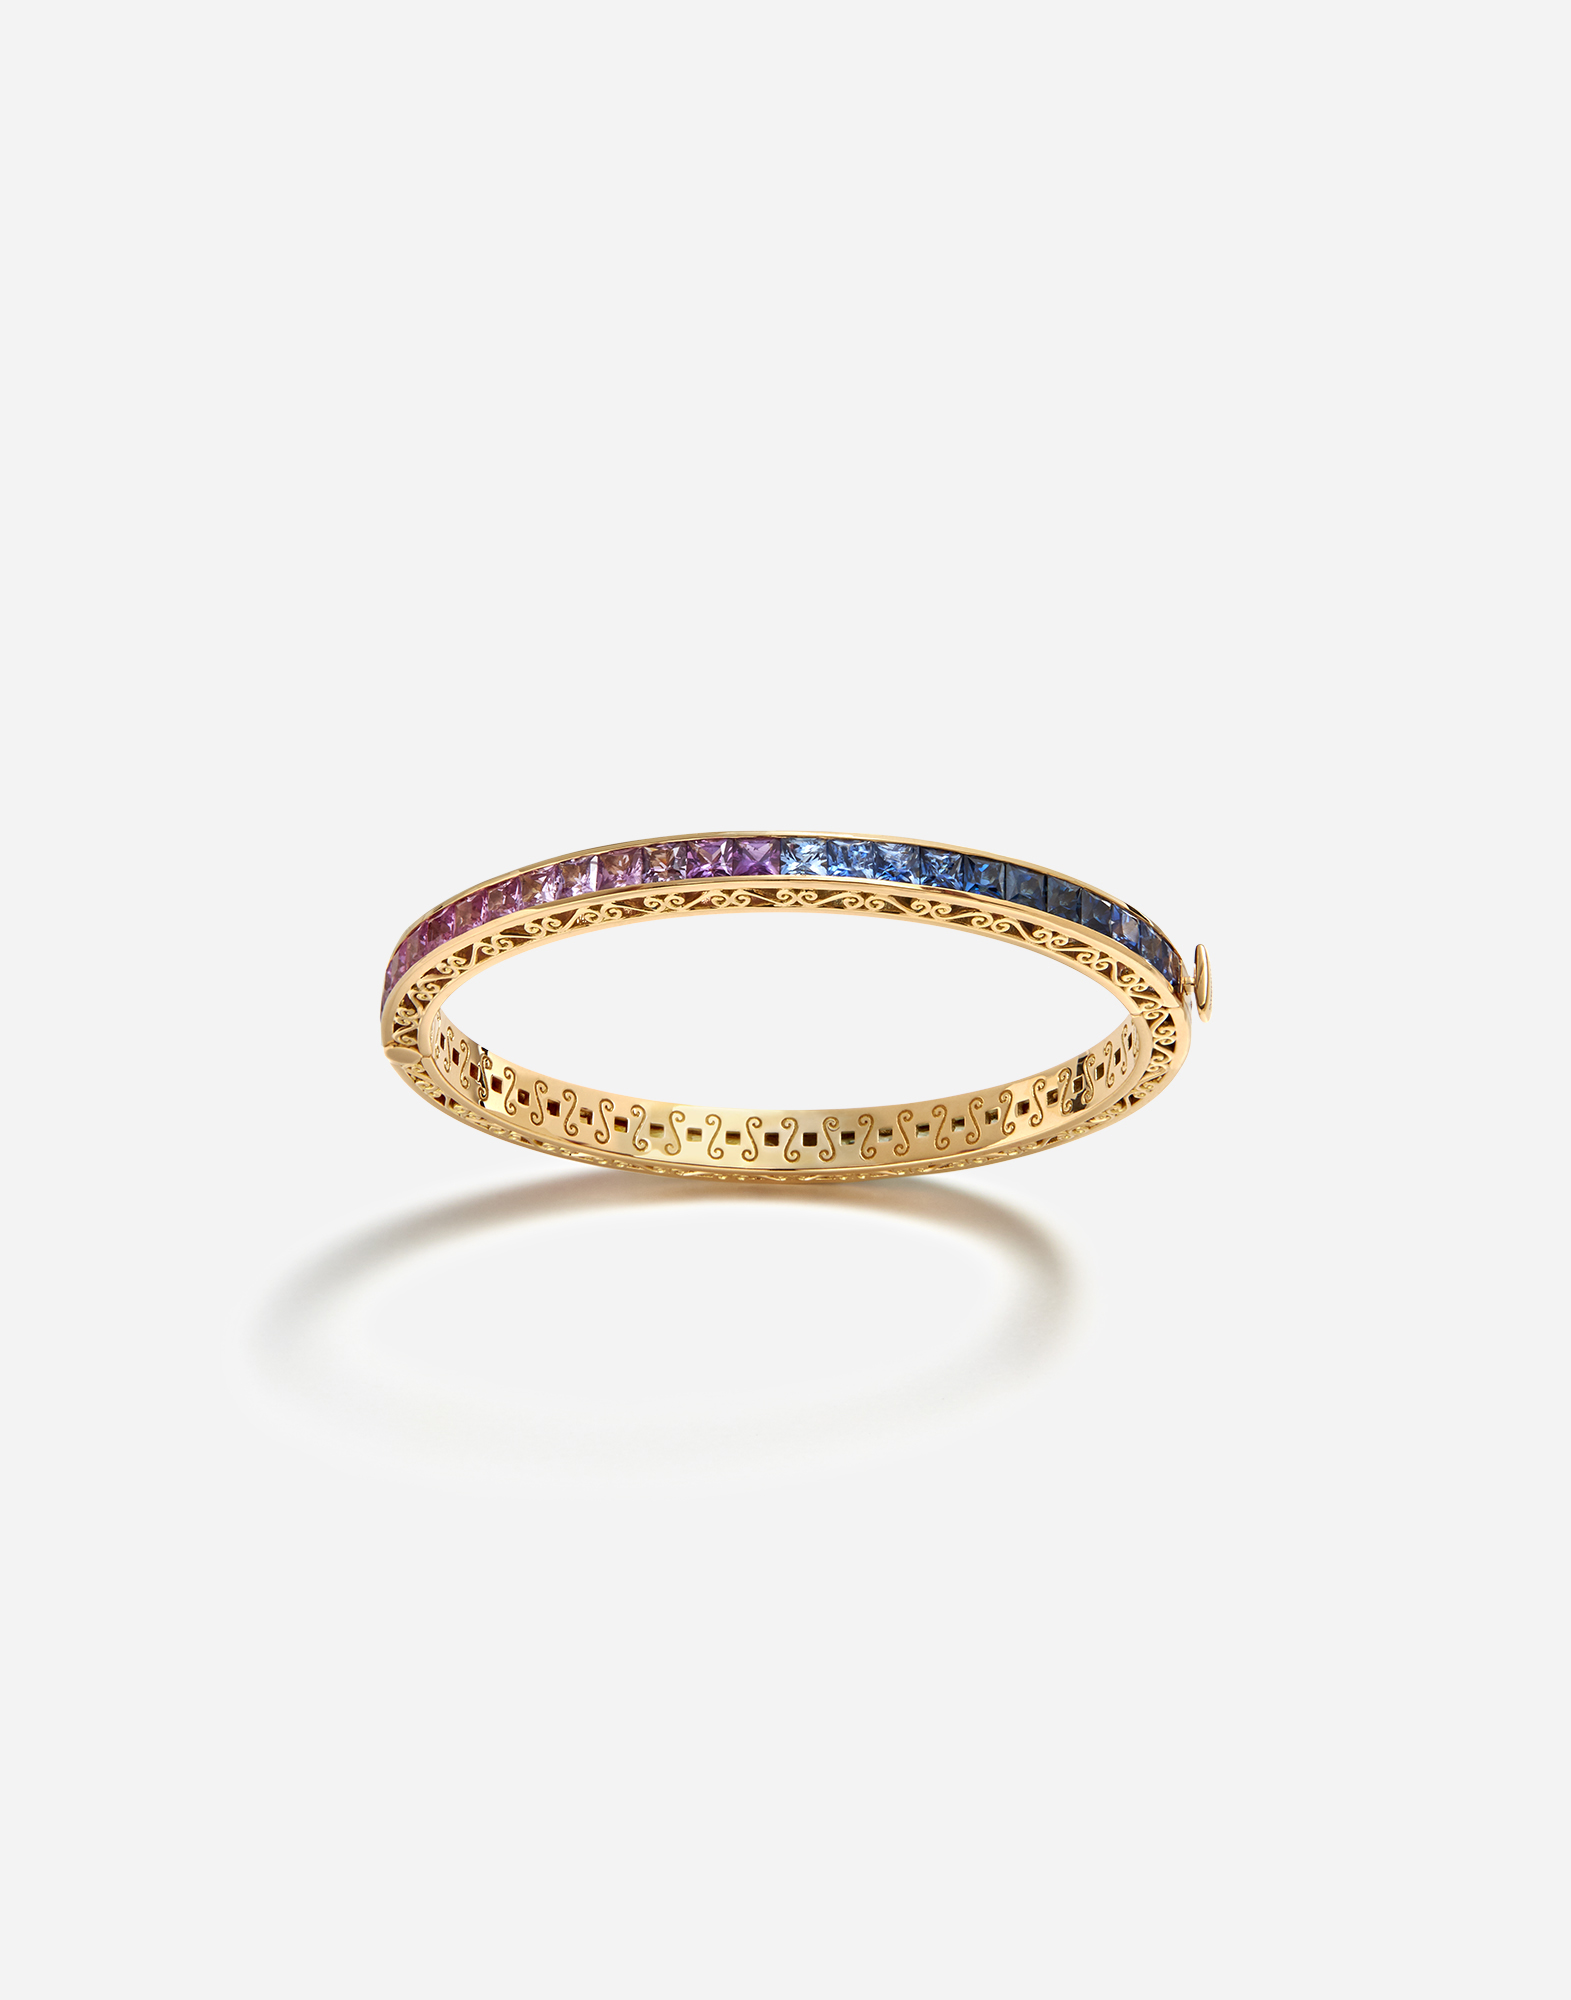 Multicolor sapphire bracelet in Gold